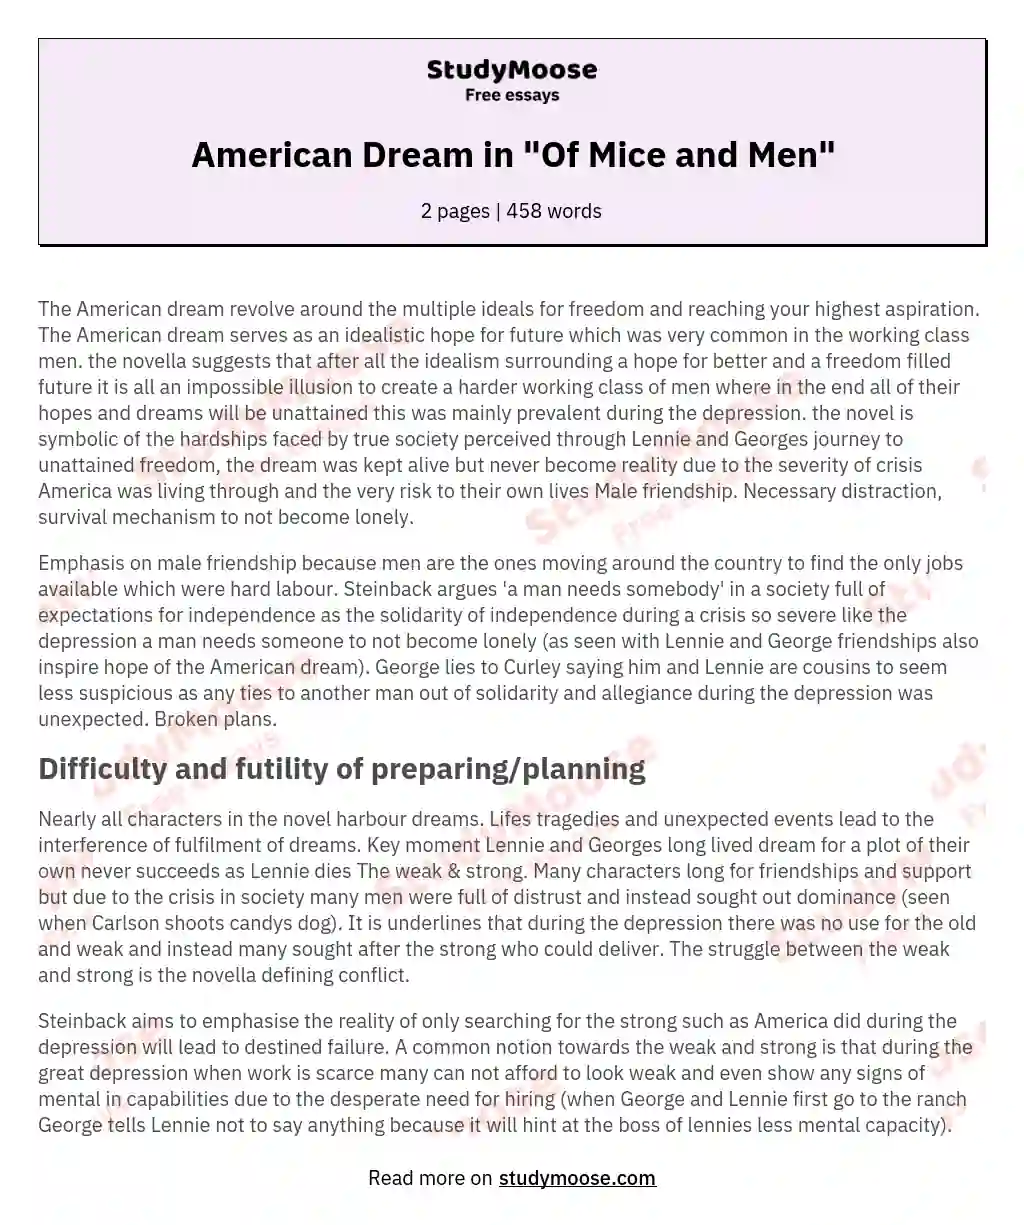 American Dream in "Of Mice and Men" essay